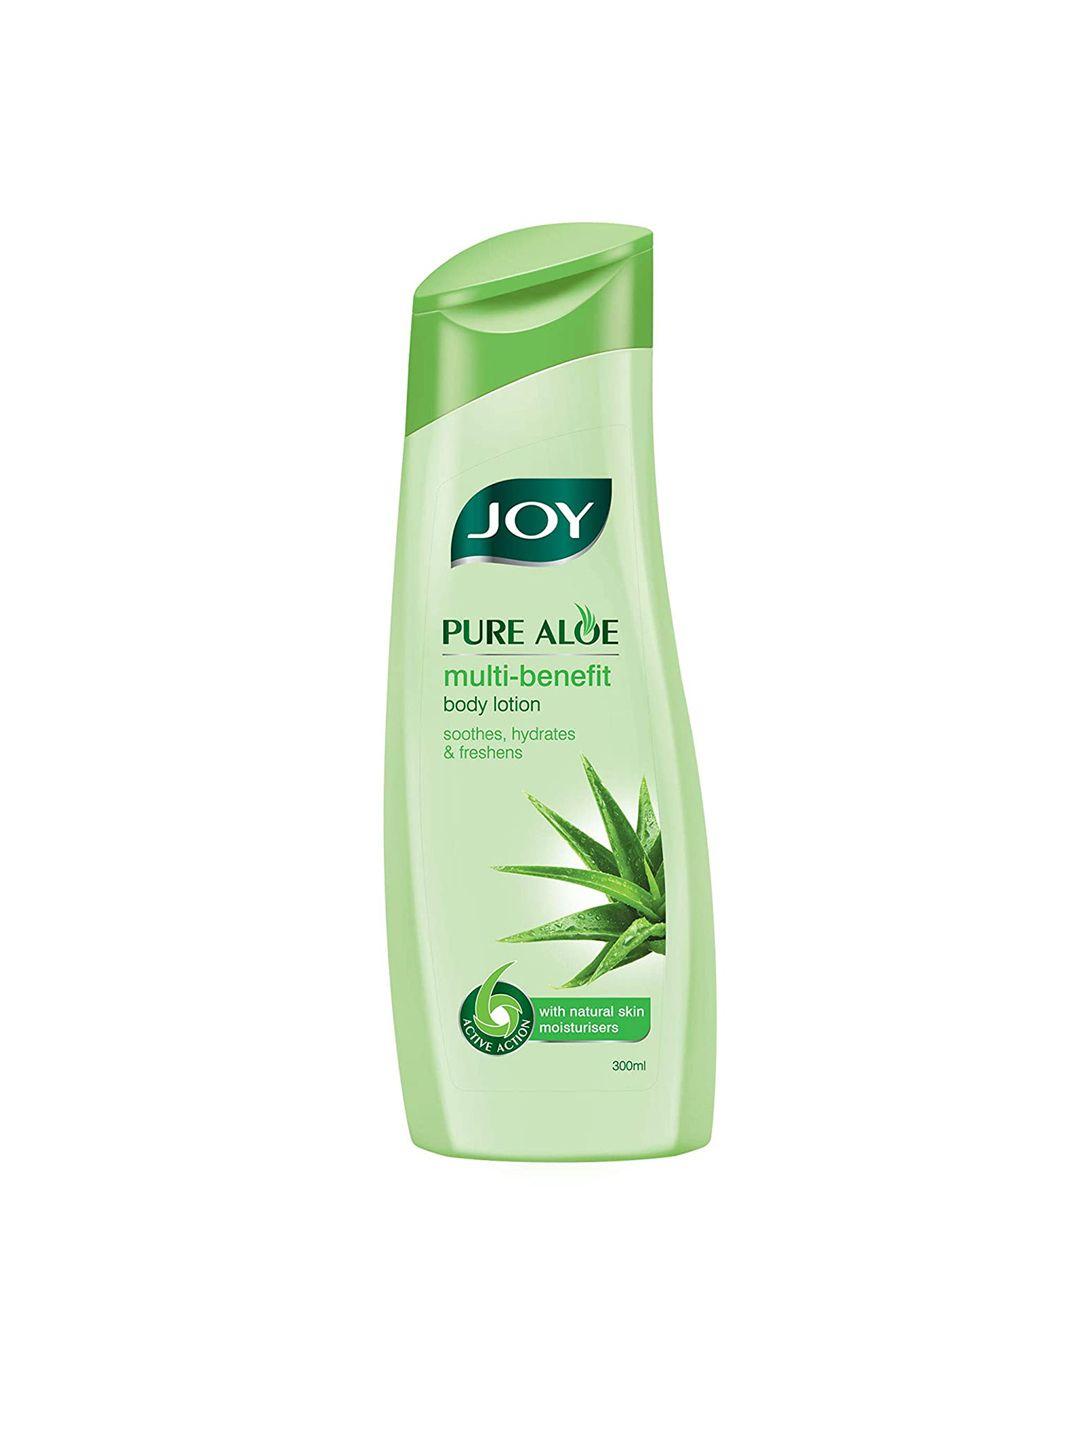 joy pure aloe multi-benefit body lotion - 300 ml